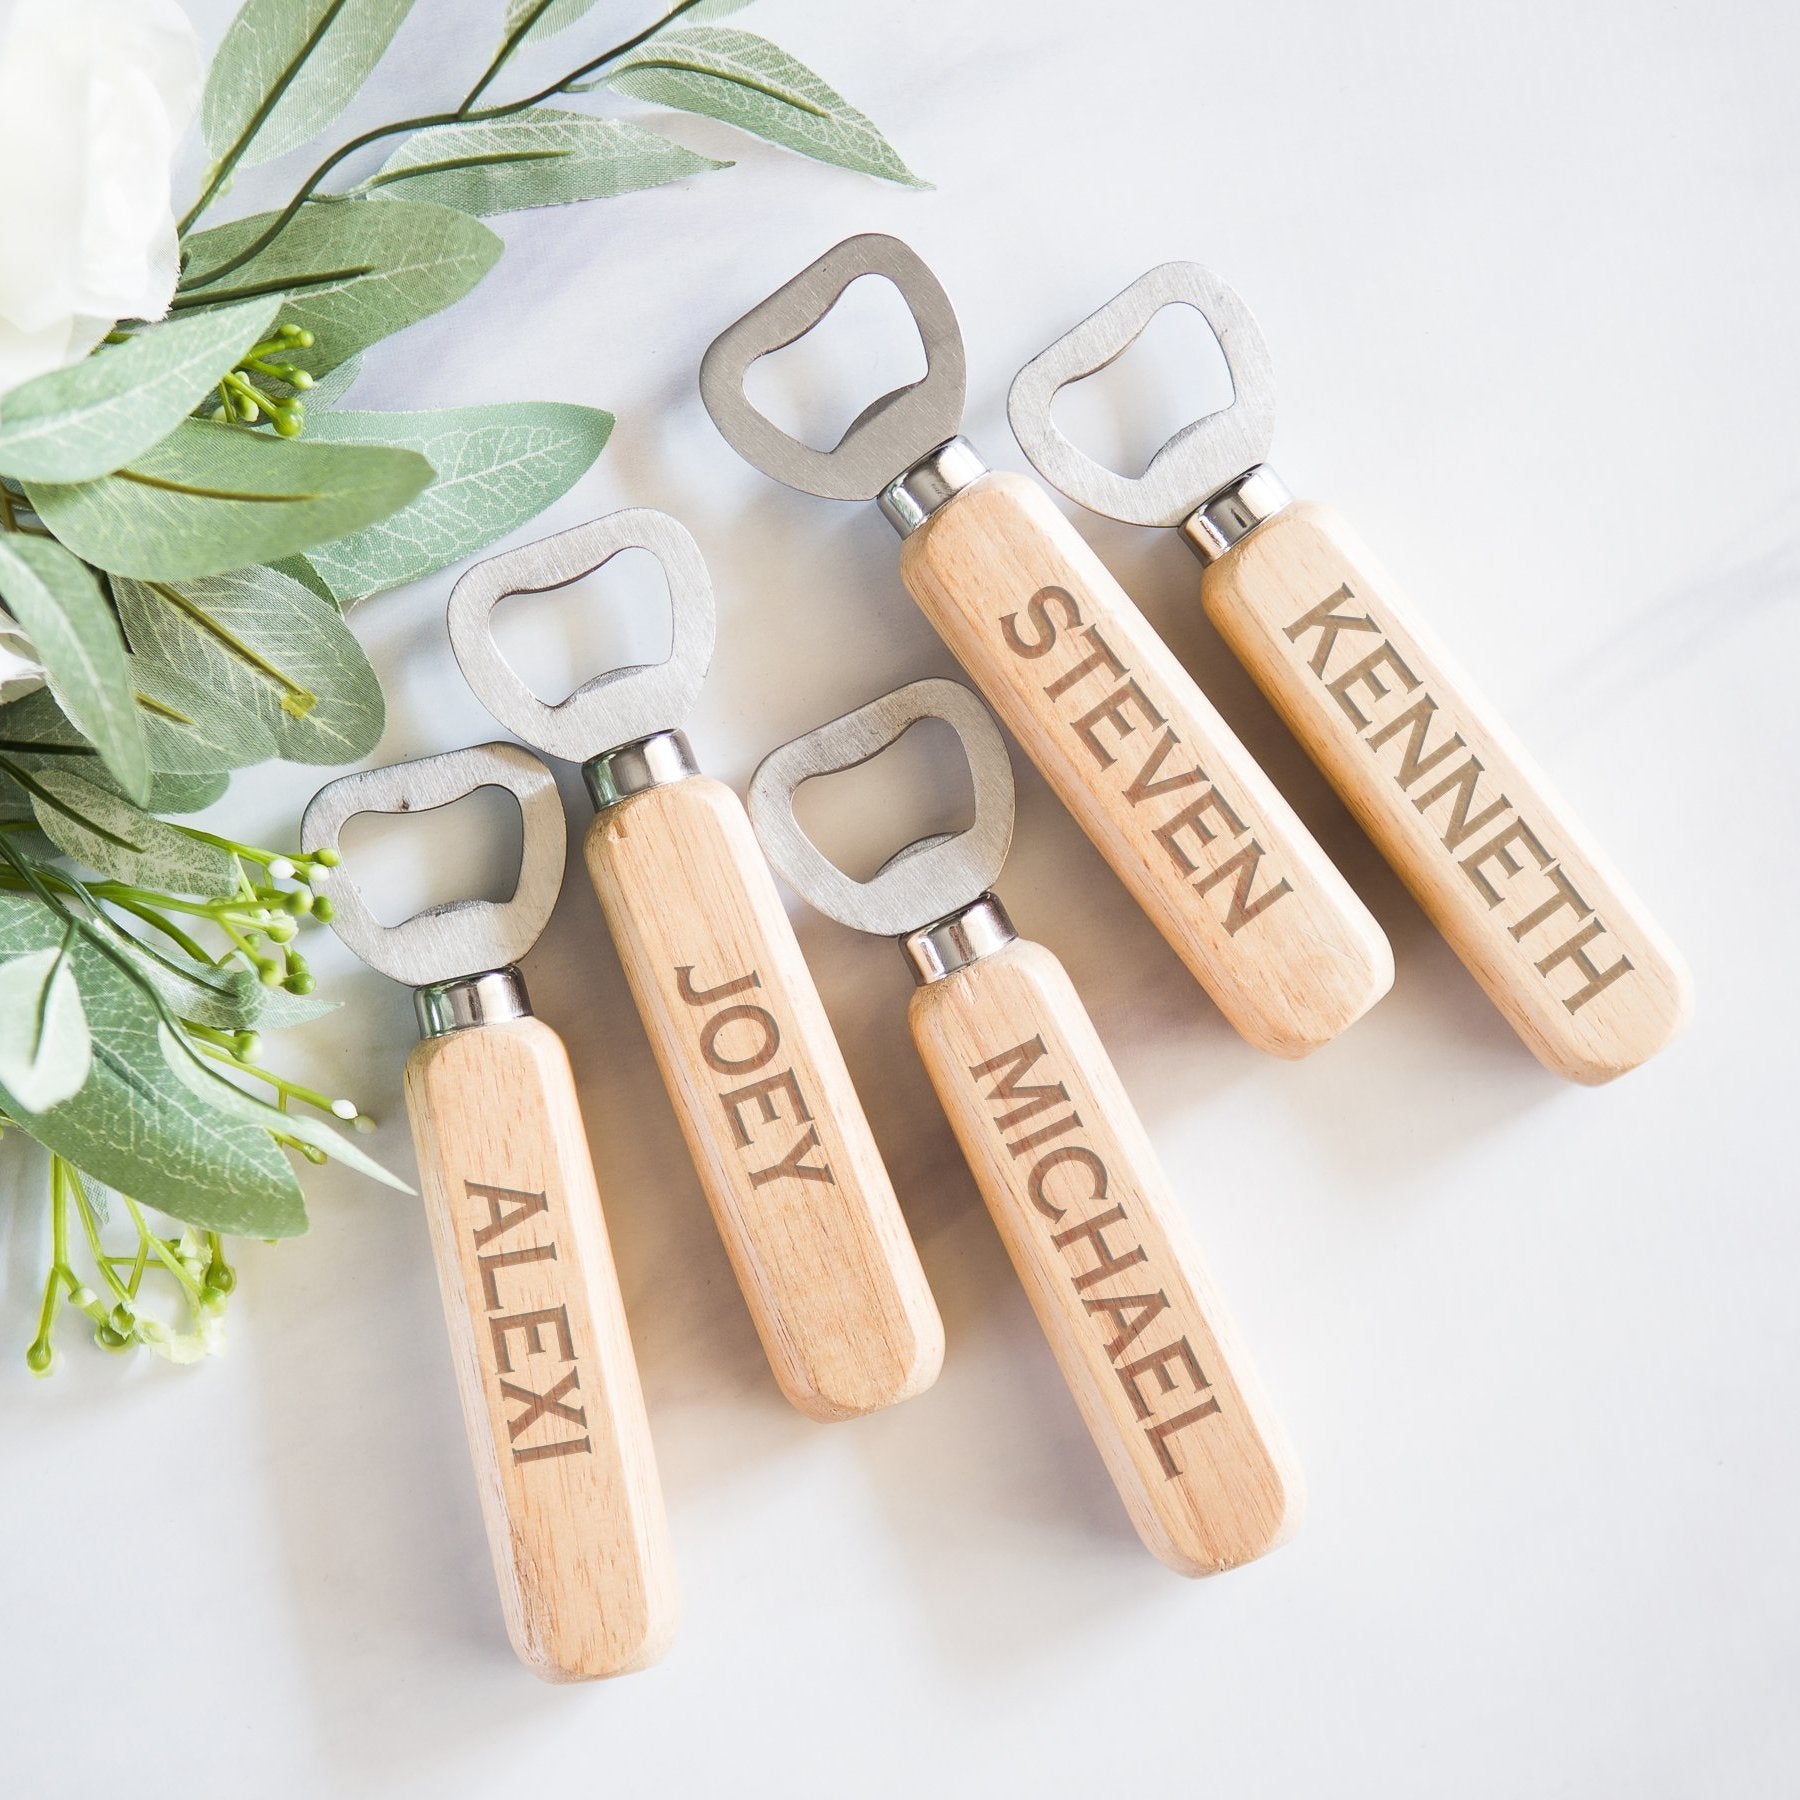 Personalized Bottle Opener Keychains: Groomsmen Gifts